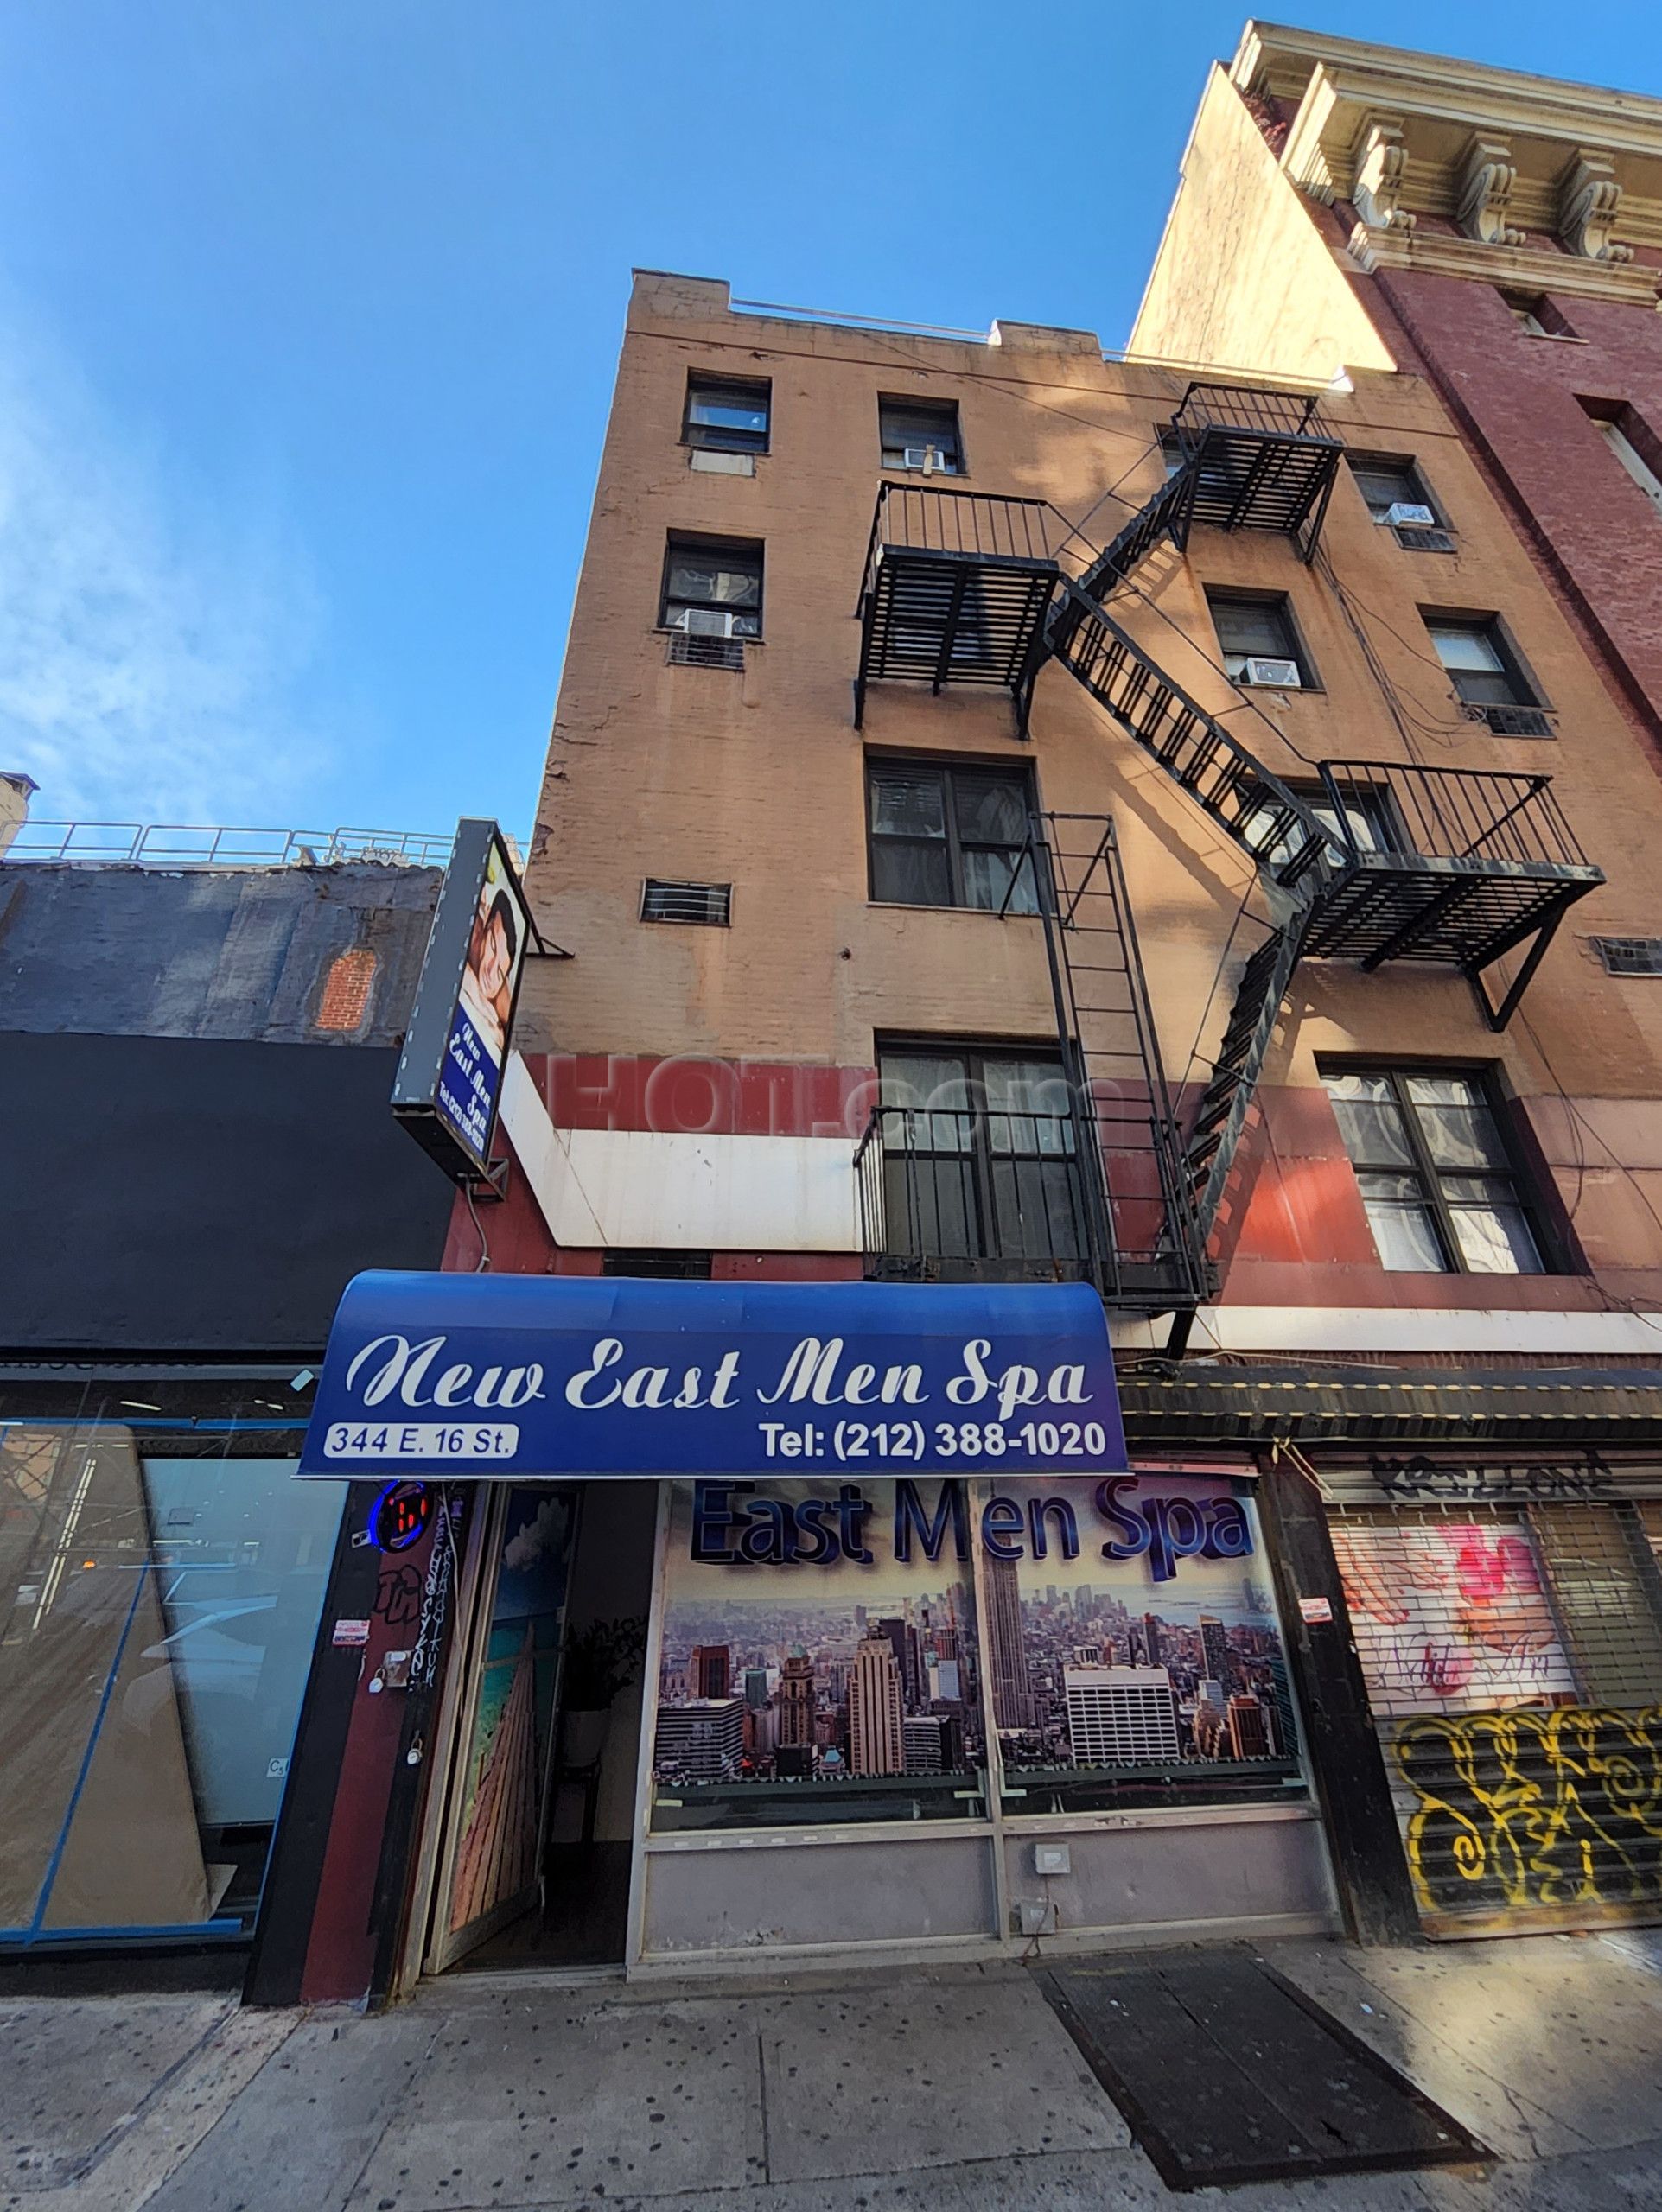 New York City, New York East Men Spa